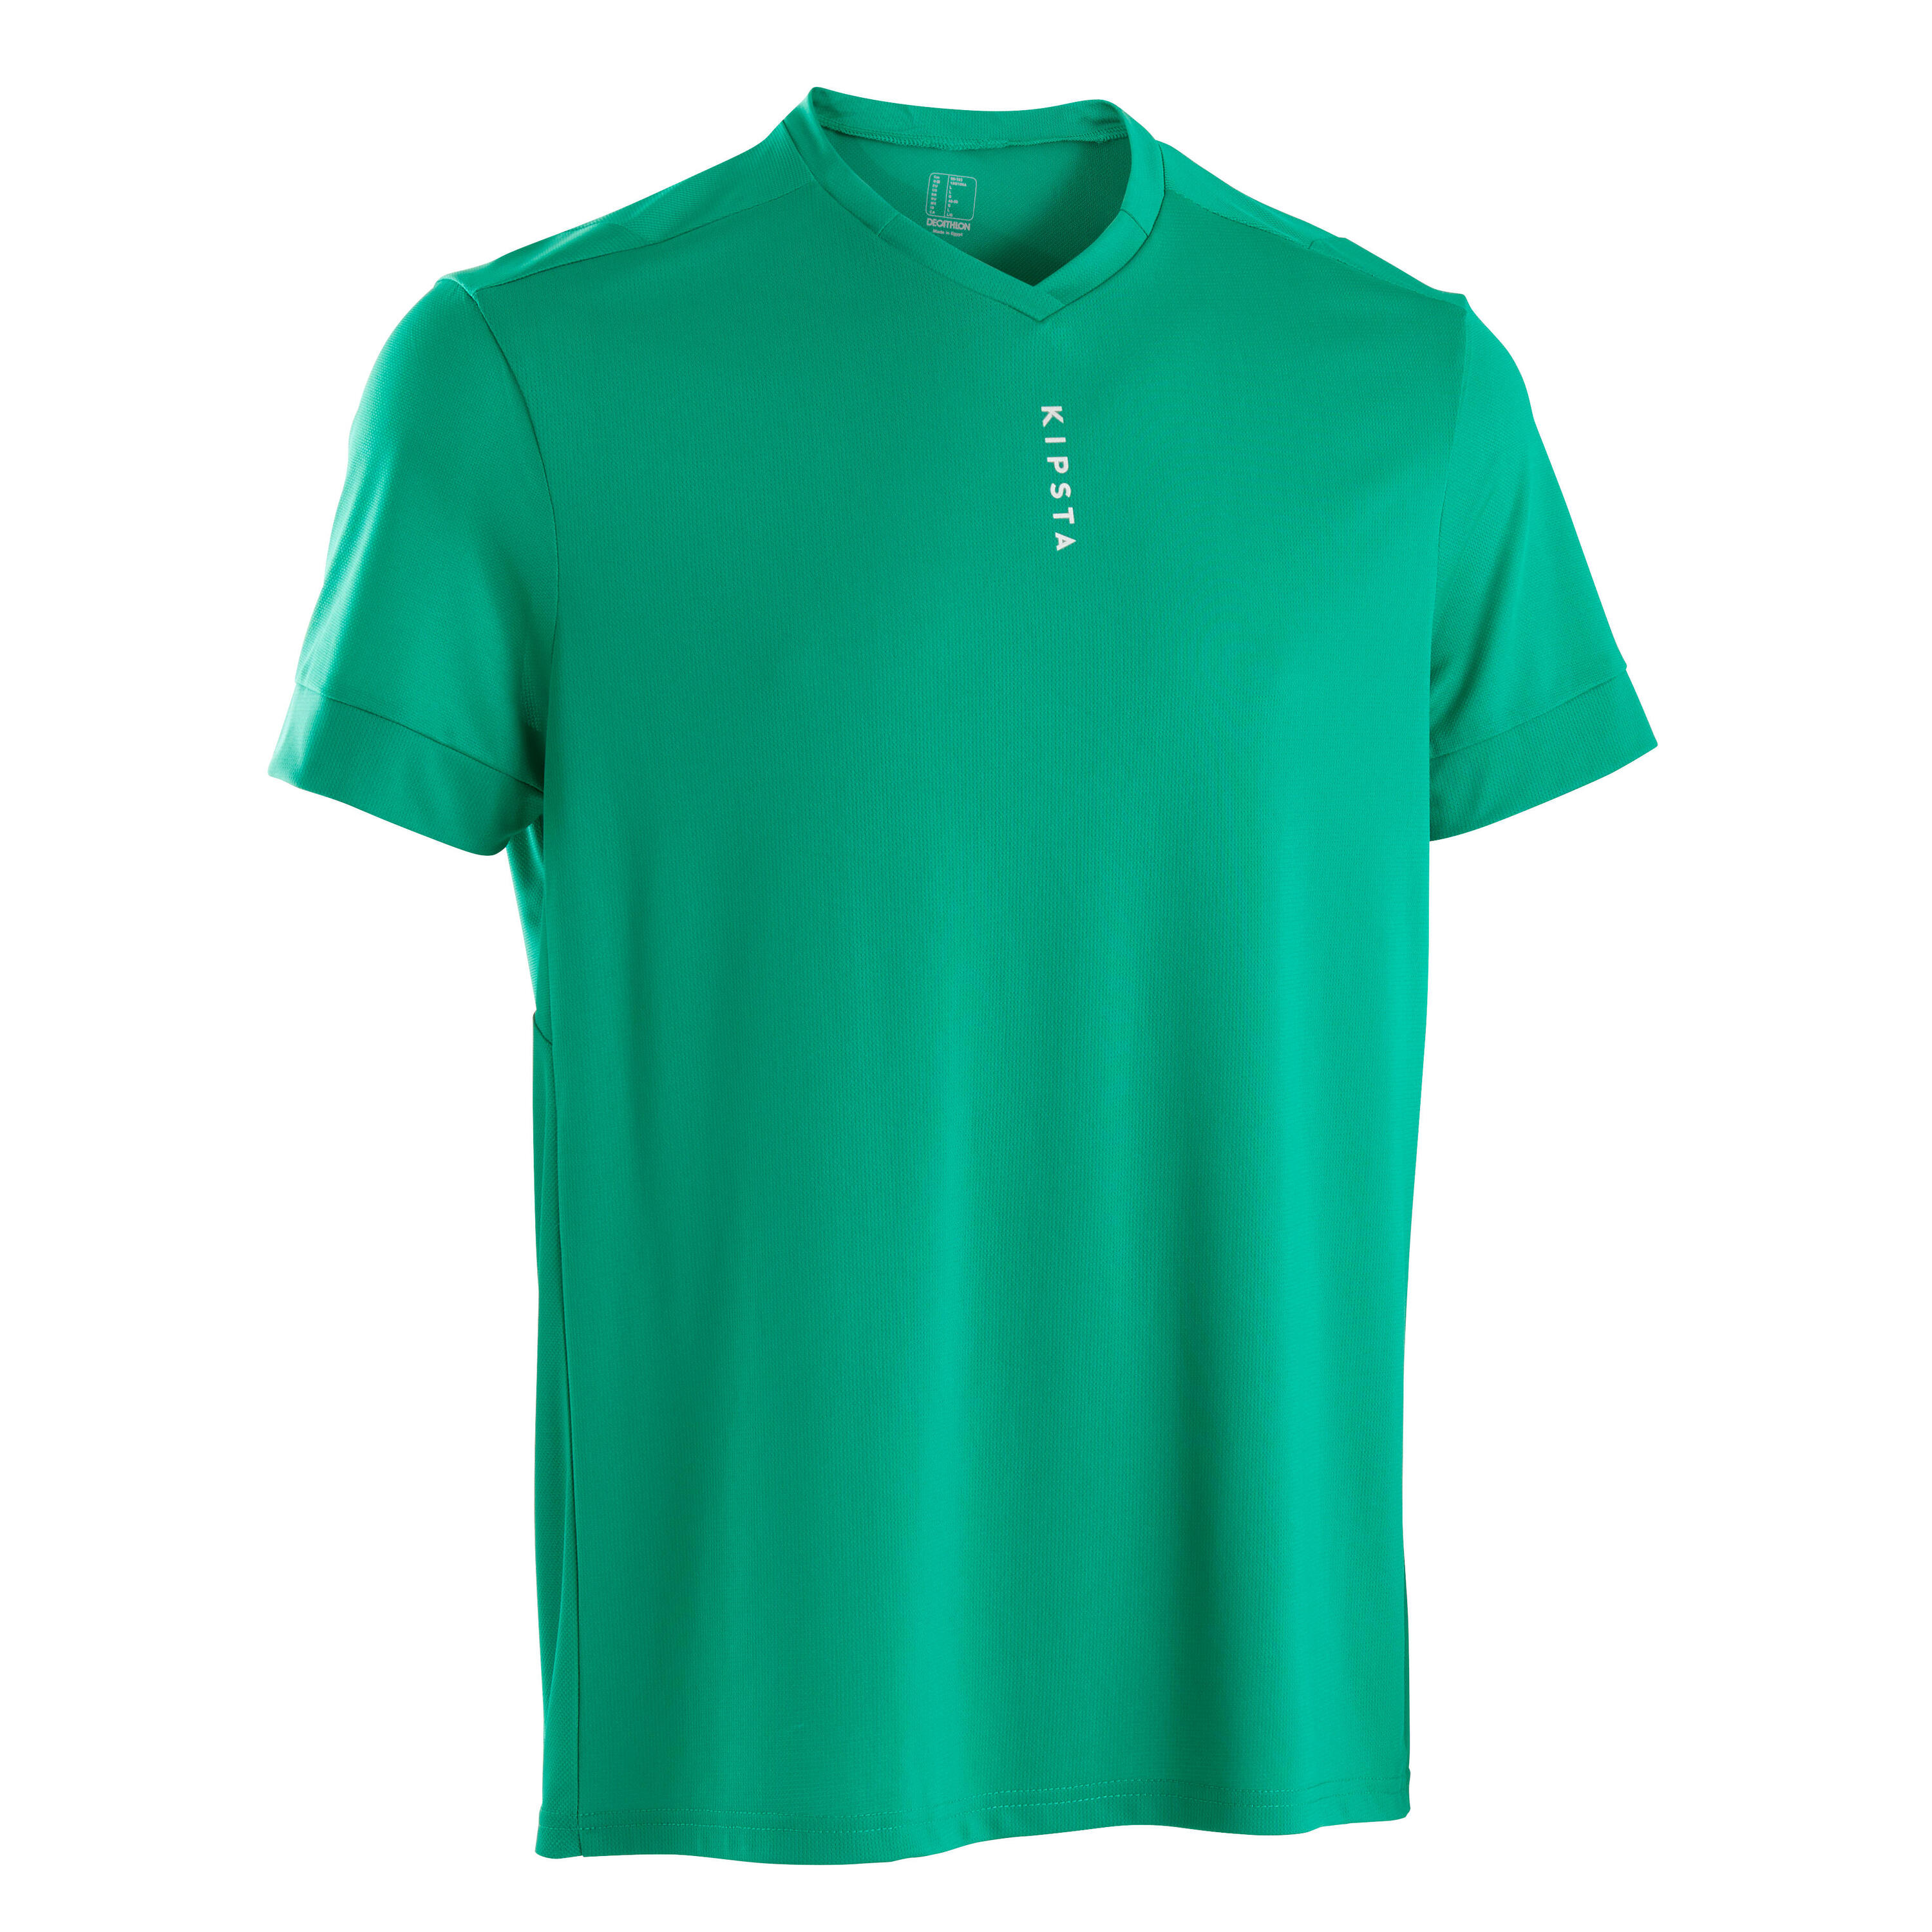 Adult Football Shirt F500 - Plain Green 1/4